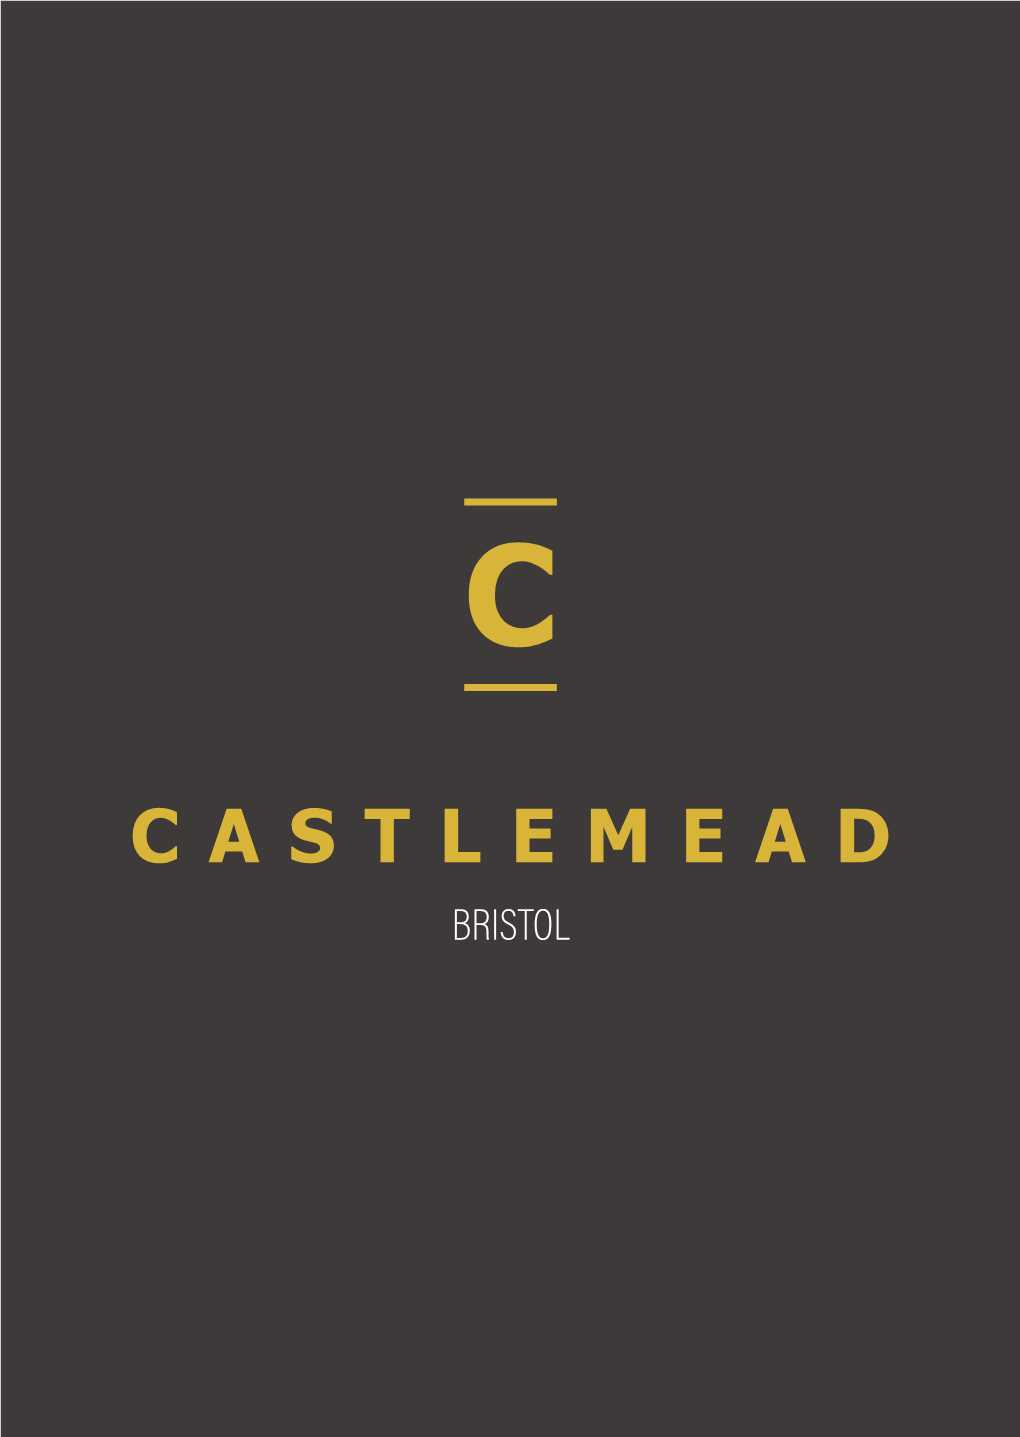 Castlemead Bristol a New Benchmark in Bristol